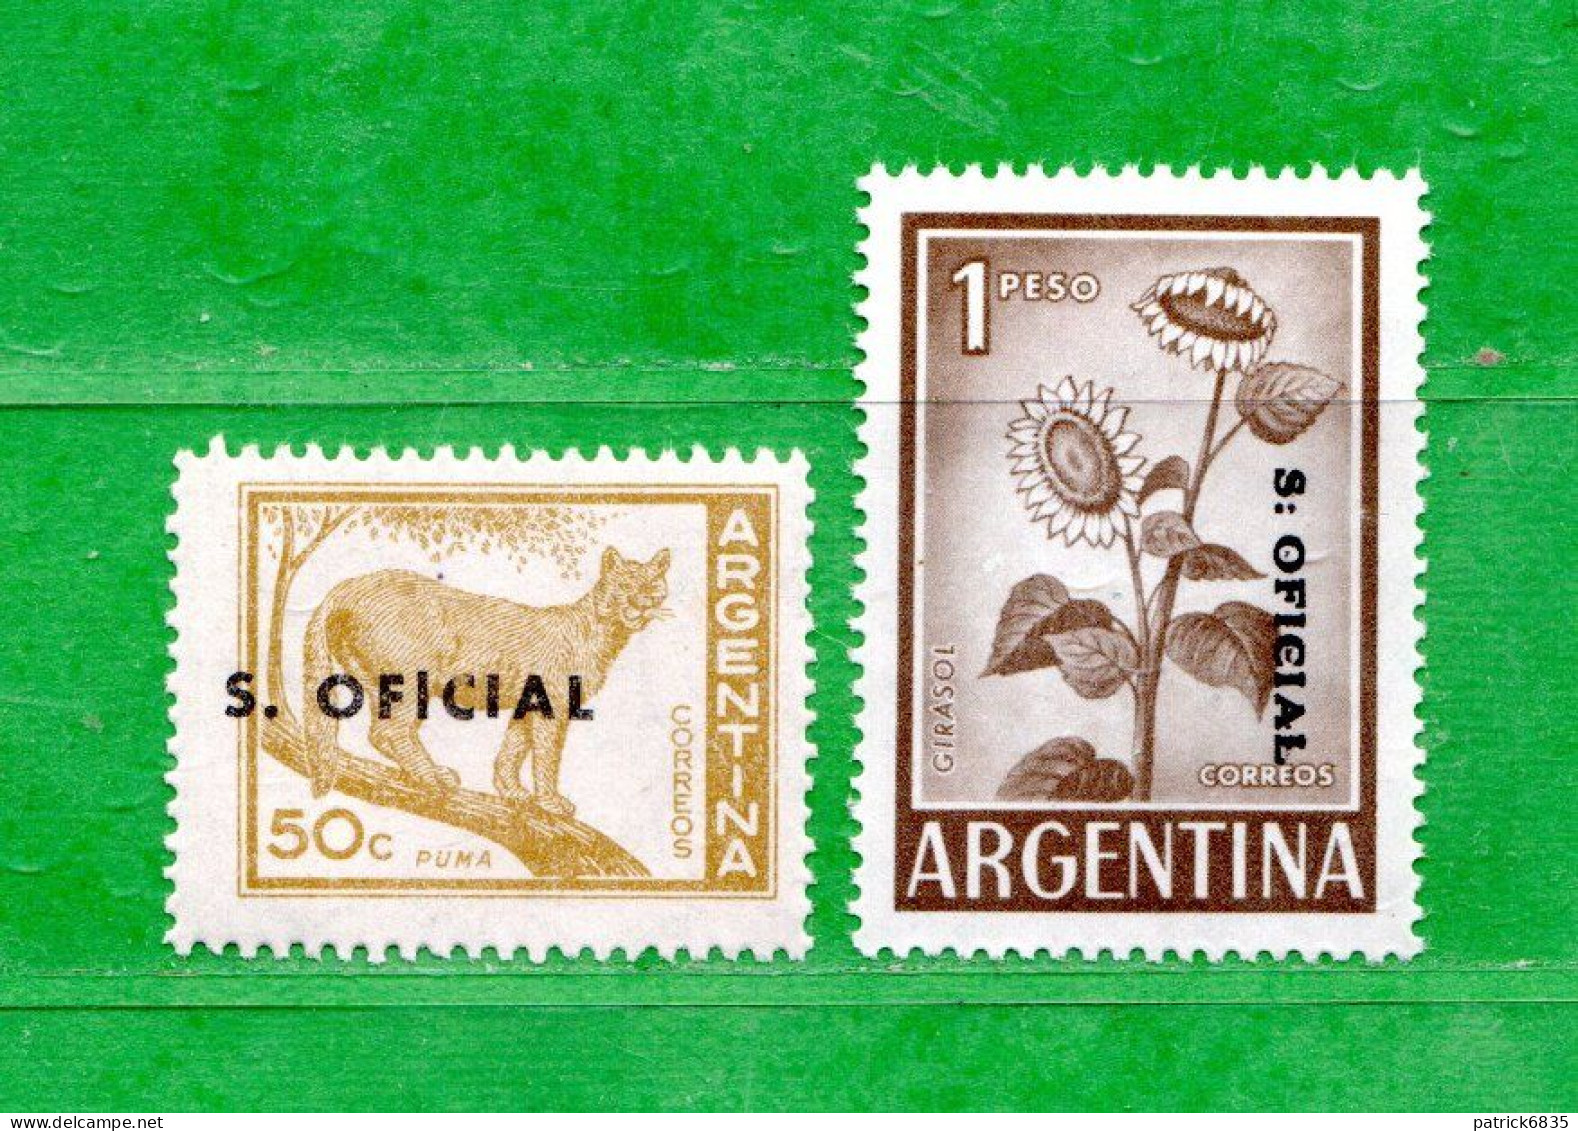 (Mn.1 ) Argentina - ** 1959- S.OFICIAL - PUMA - Tournesol.  Yvert  383-386A.  MNH** - Officials